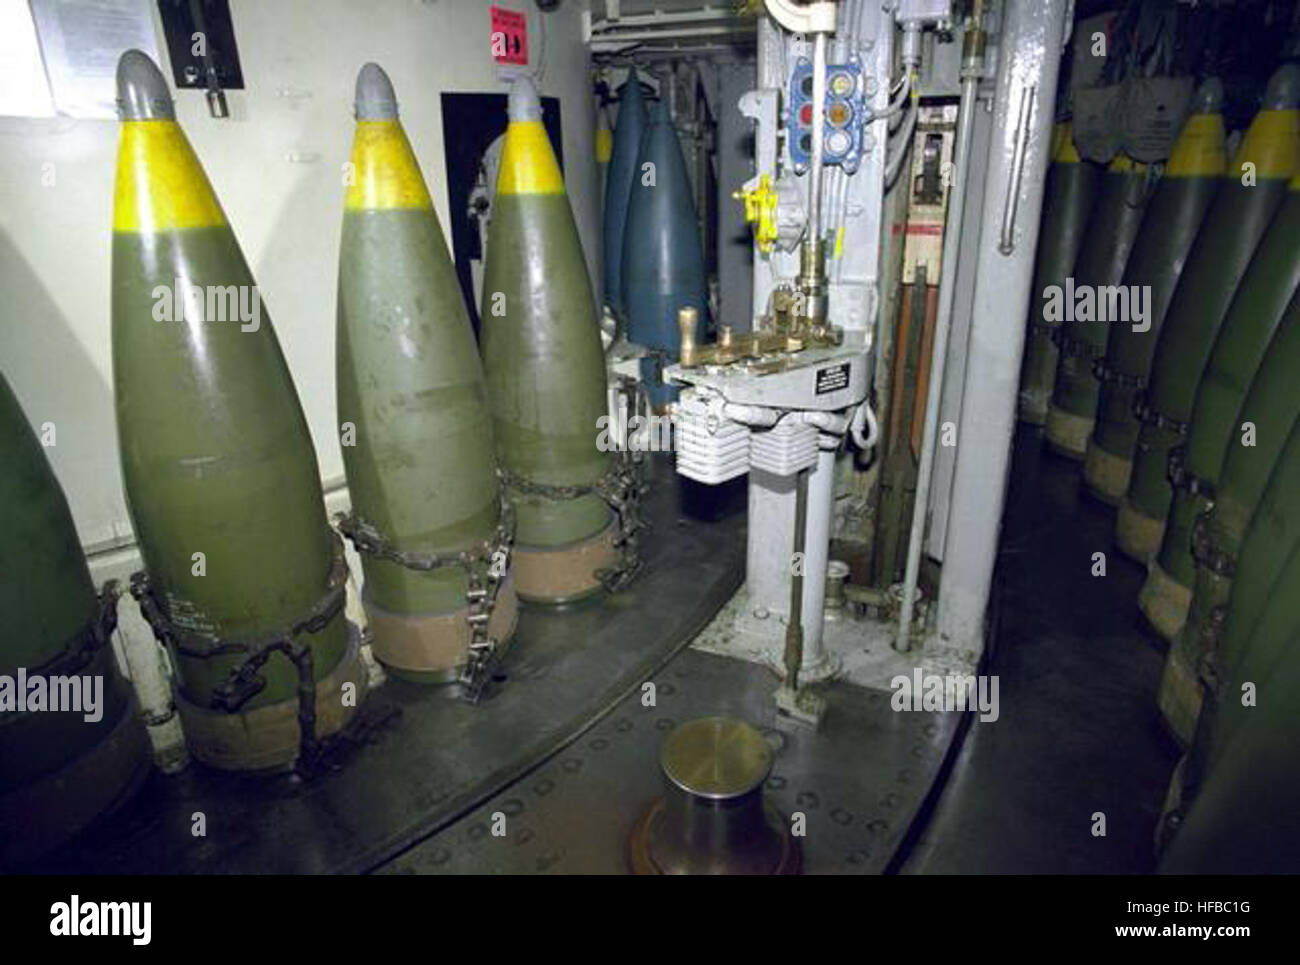 16-in Battleship Ammunition Stock Photo